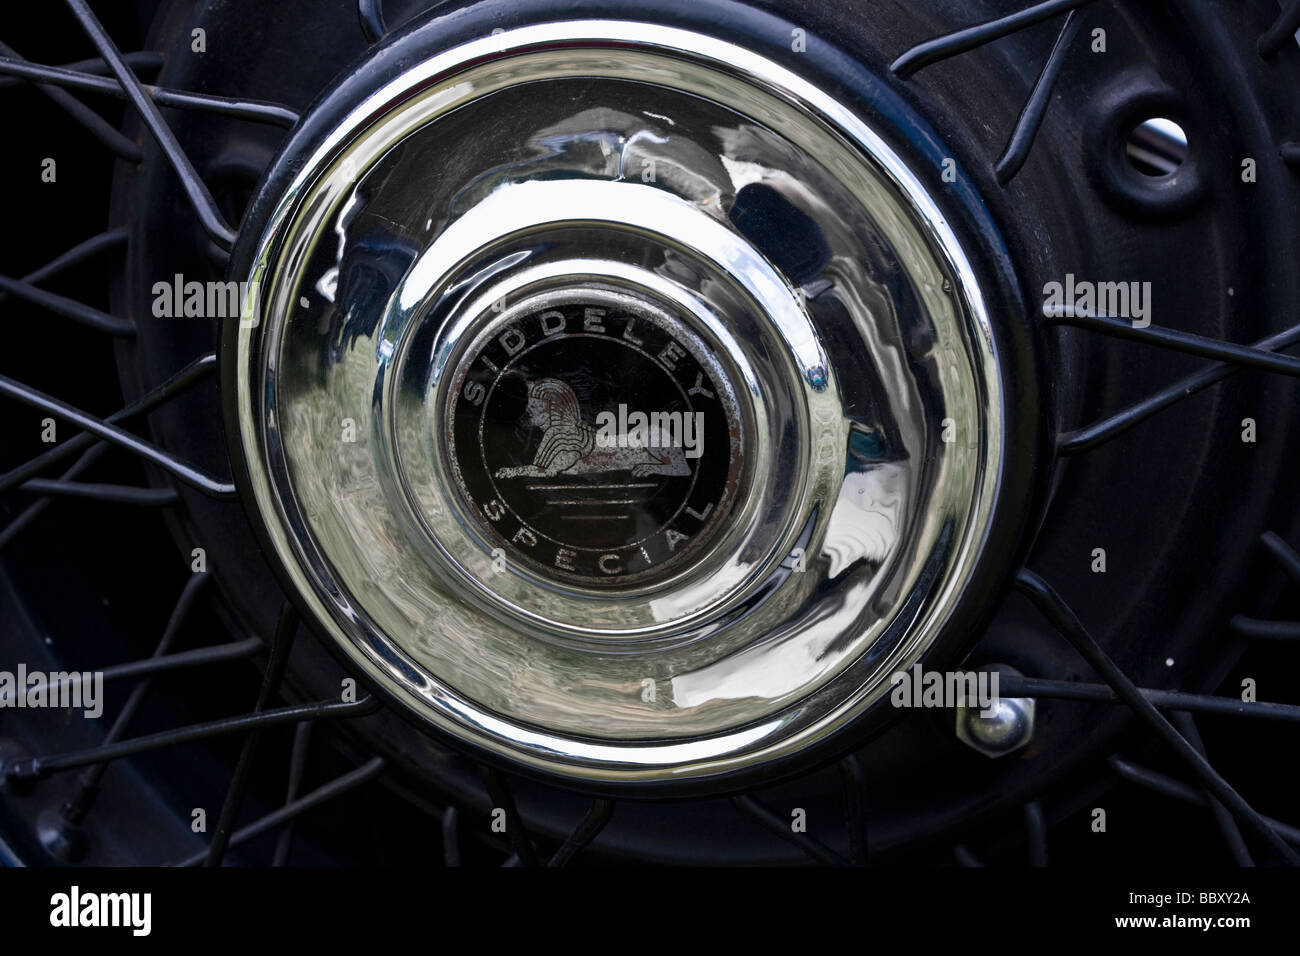 Car hub cap hi-res stock photography and images - Alamy